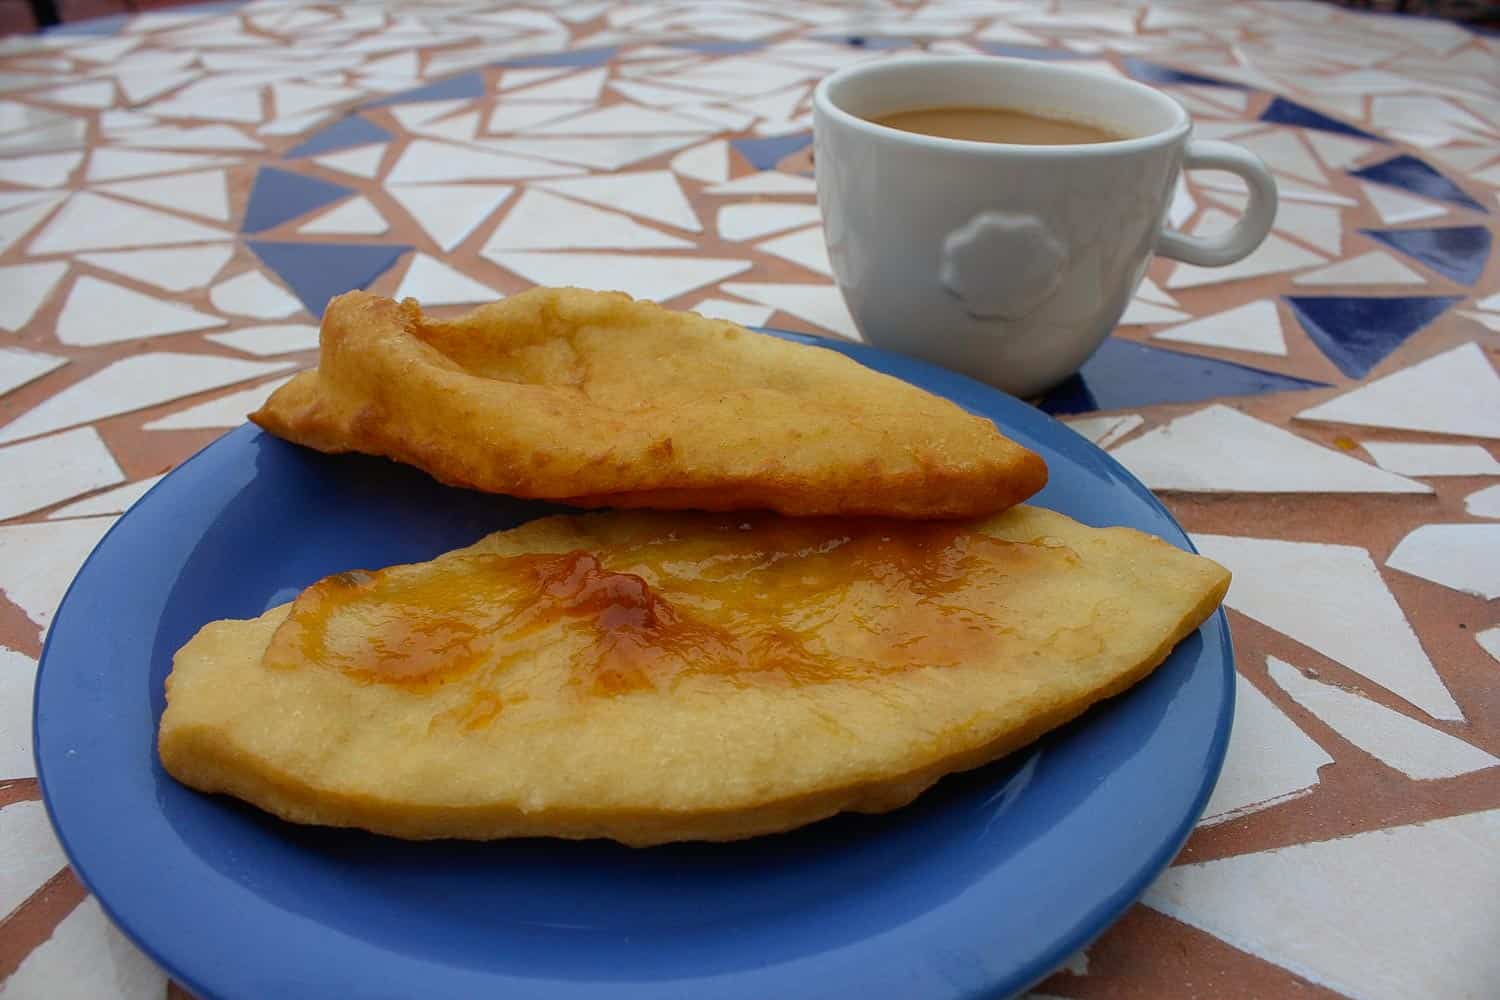 Breakfast Belizean food fry jacks with coffee